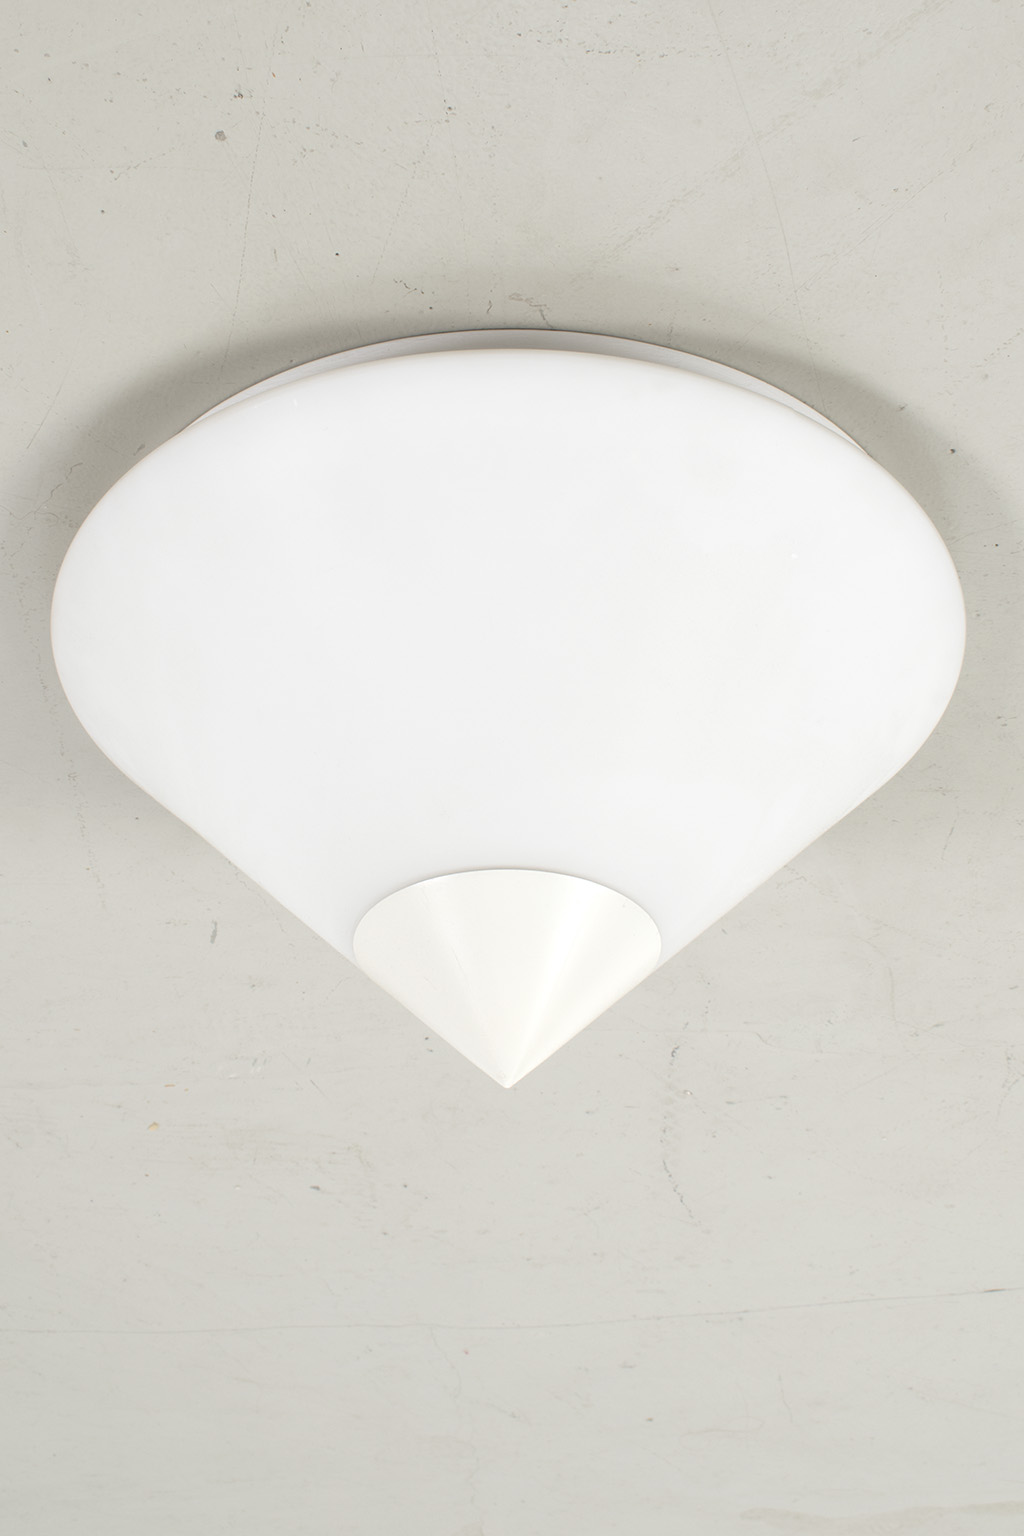 Glashütte Limburg ceiling light